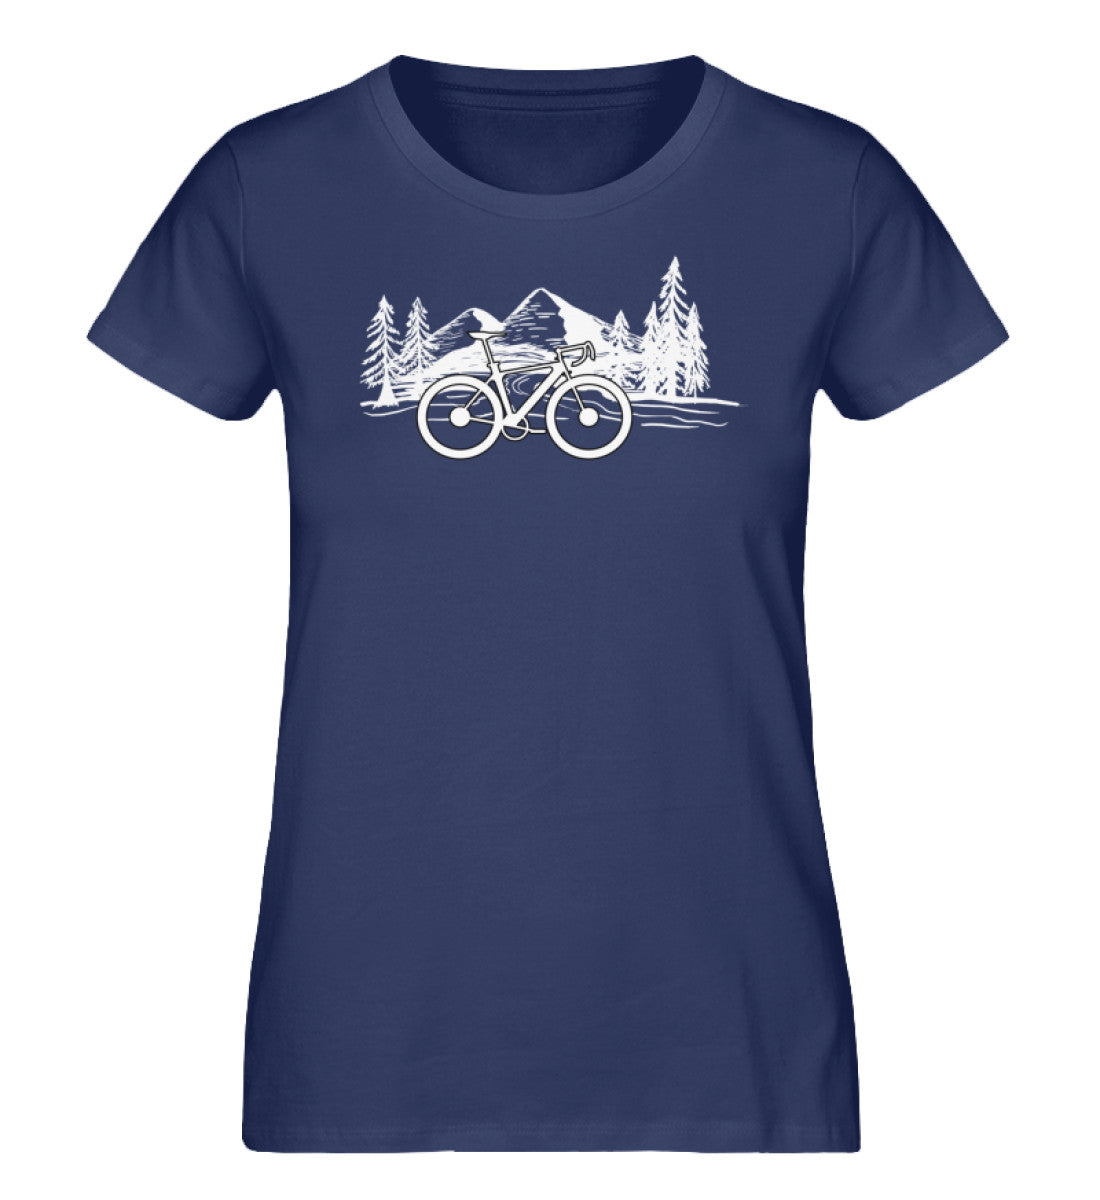 Fahrrad und Berge - Damen Premium Organic T-Shirt fahrrad mountainbike Navyblau